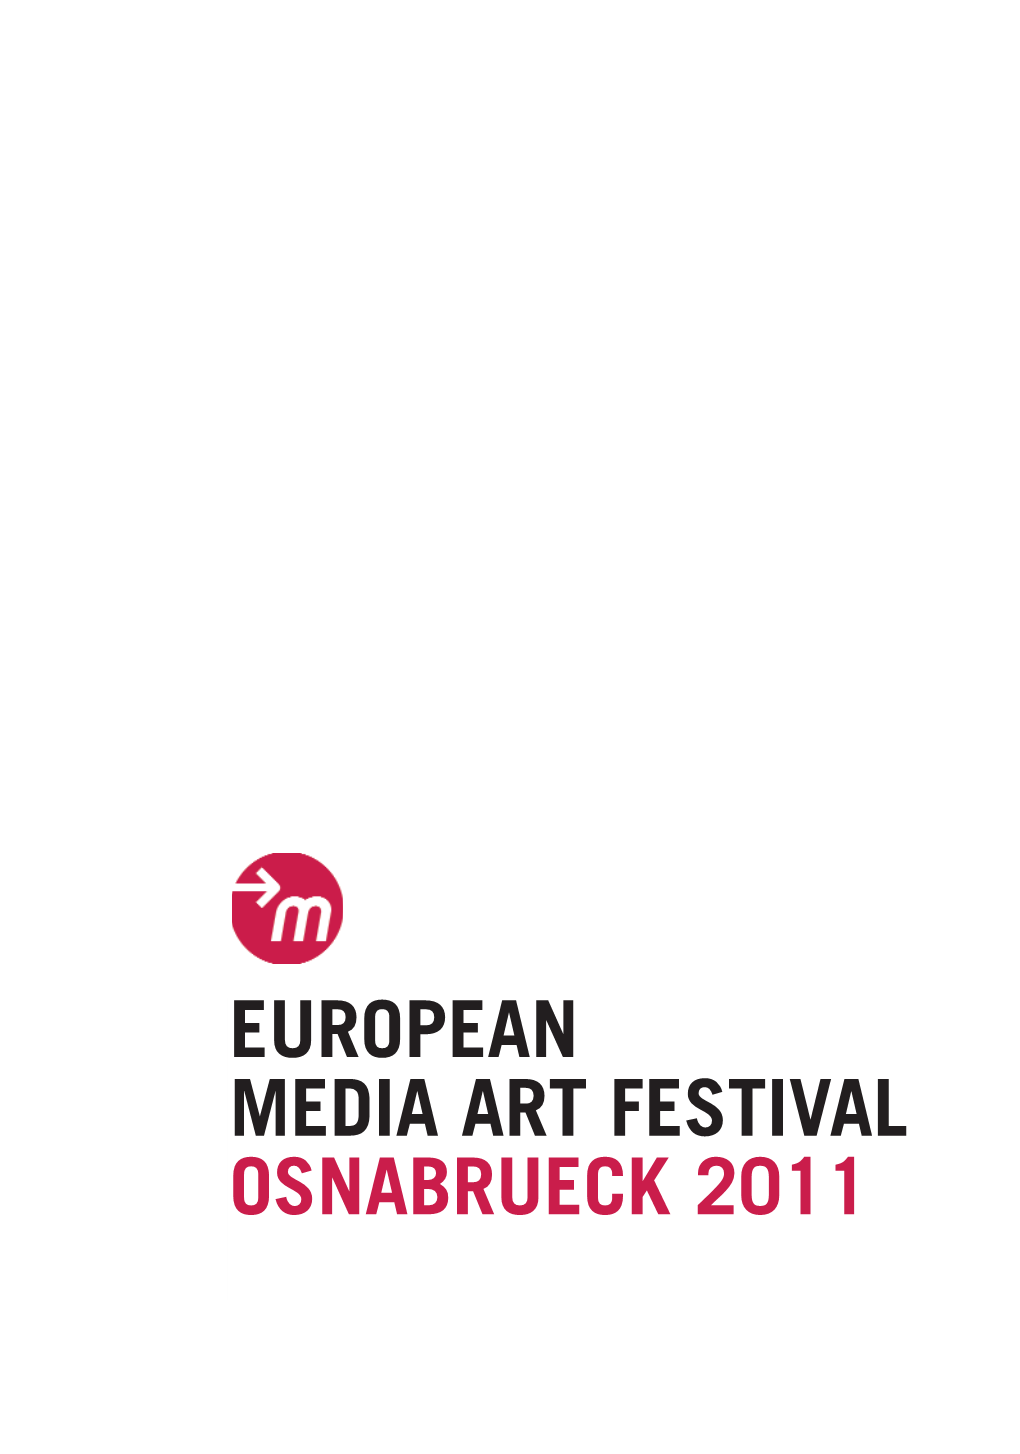 European Media Art Festival Osnabrueck 2011 Content